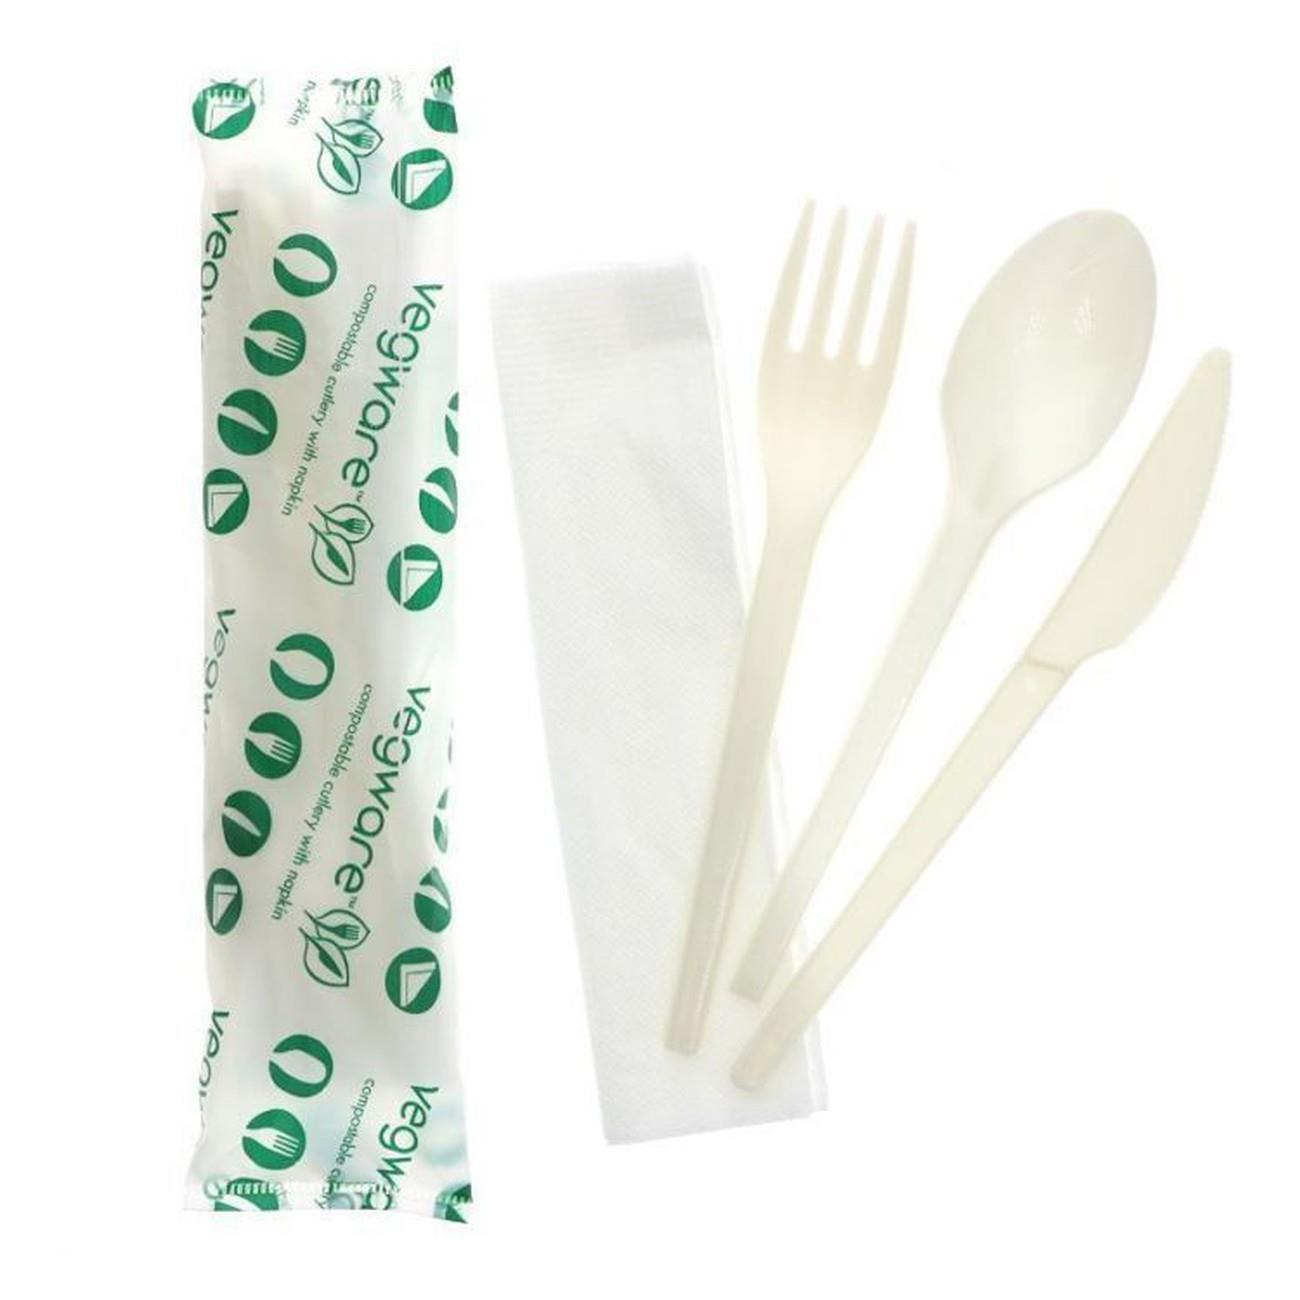 Vegware Compostable Cutlery Kit